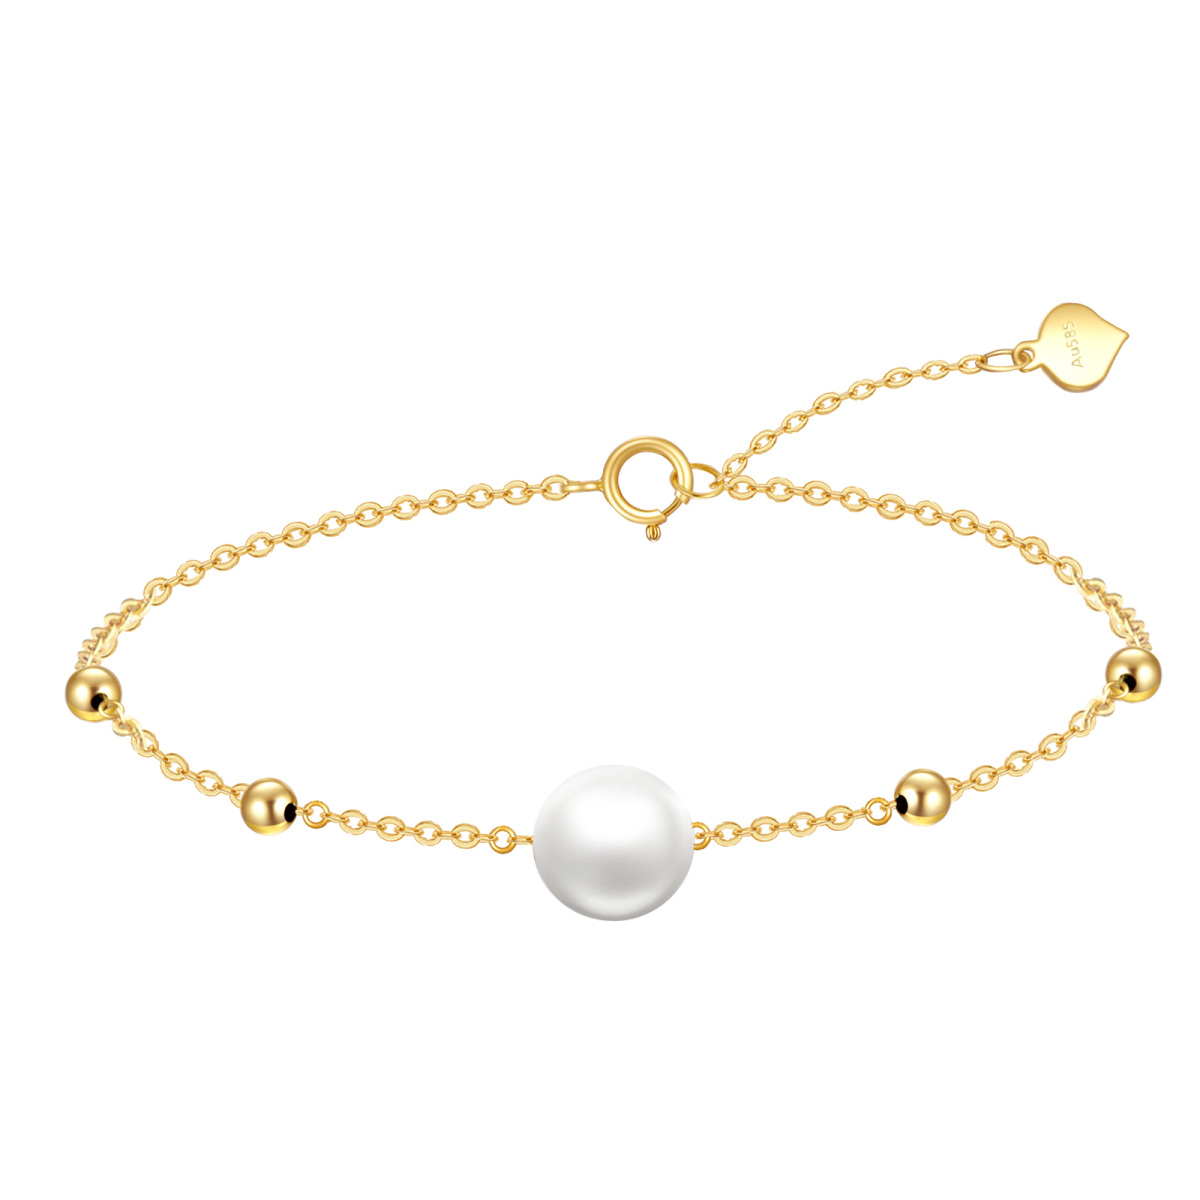 Bracelet en or 14K avec pendentif en forme de perle circulaire-1